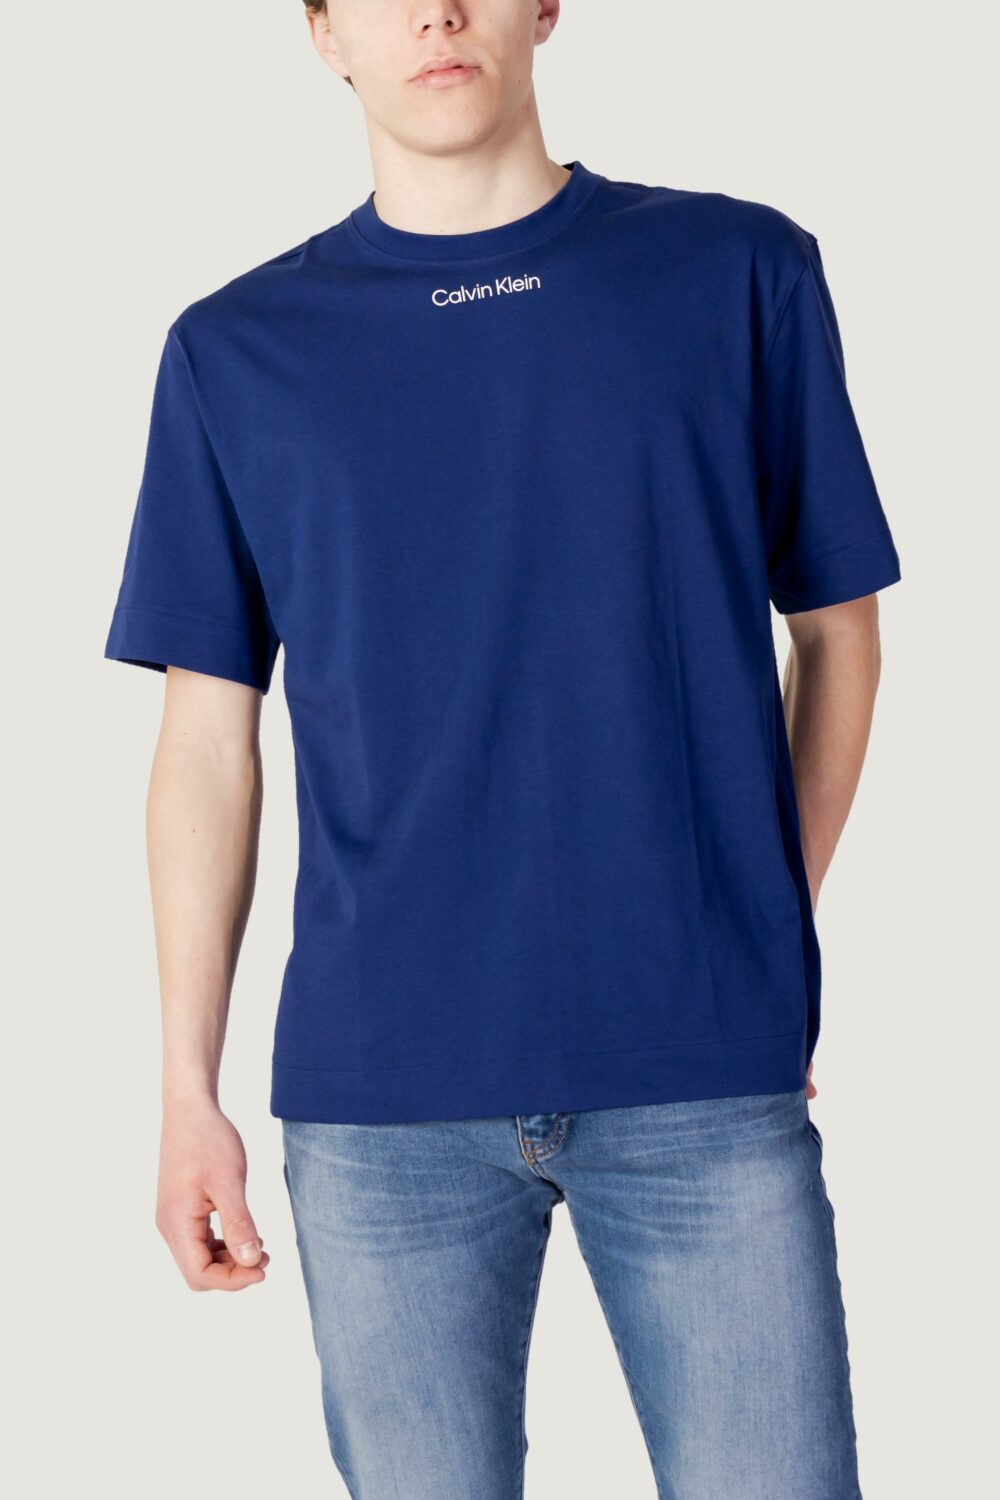 T-shirt Calvin Klein Sport PW - S/S Blu - Foto 1